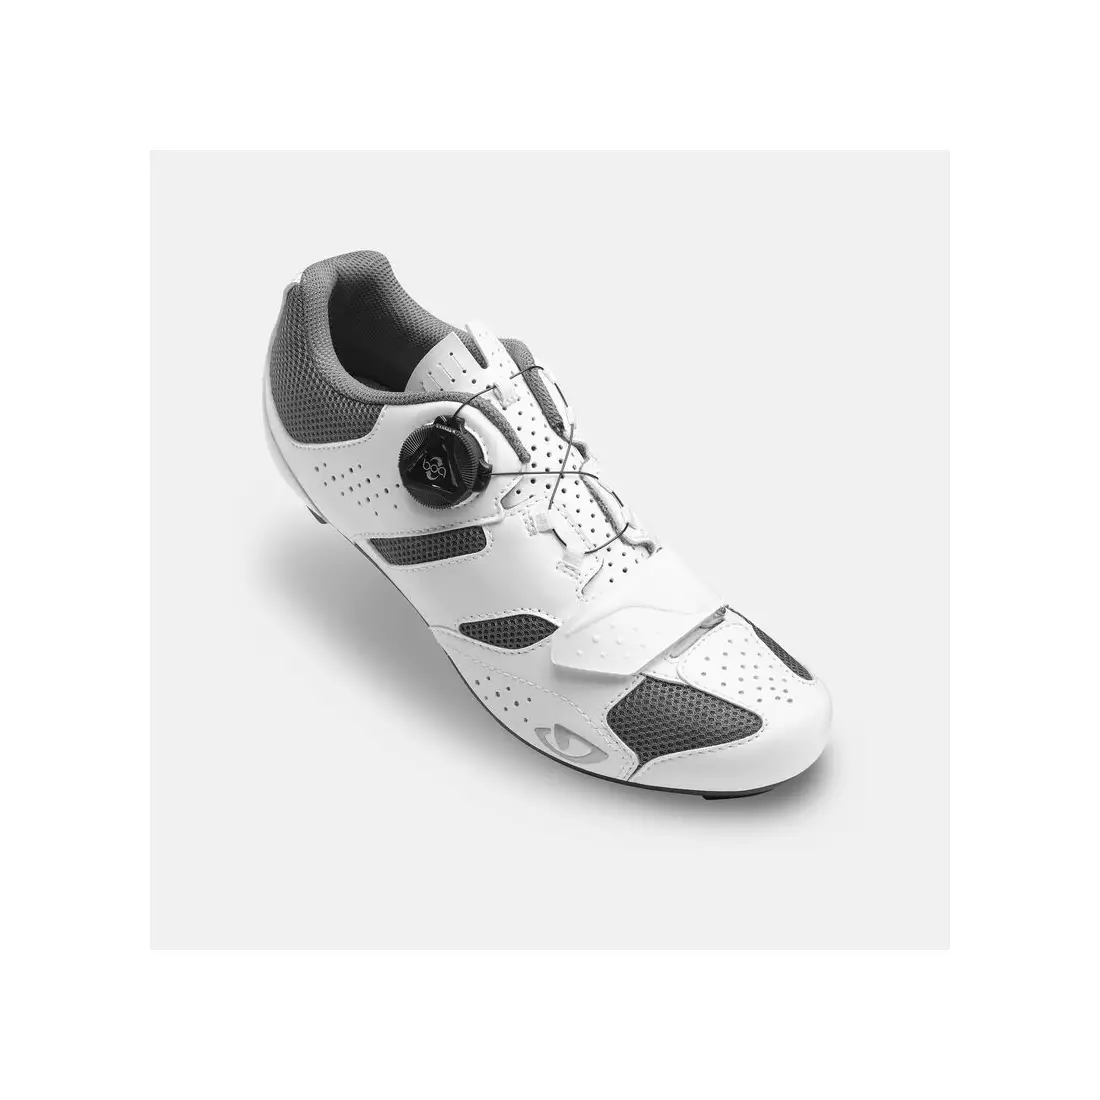 GIRO ladies' bicycle shoes savix II w white GR-7126211